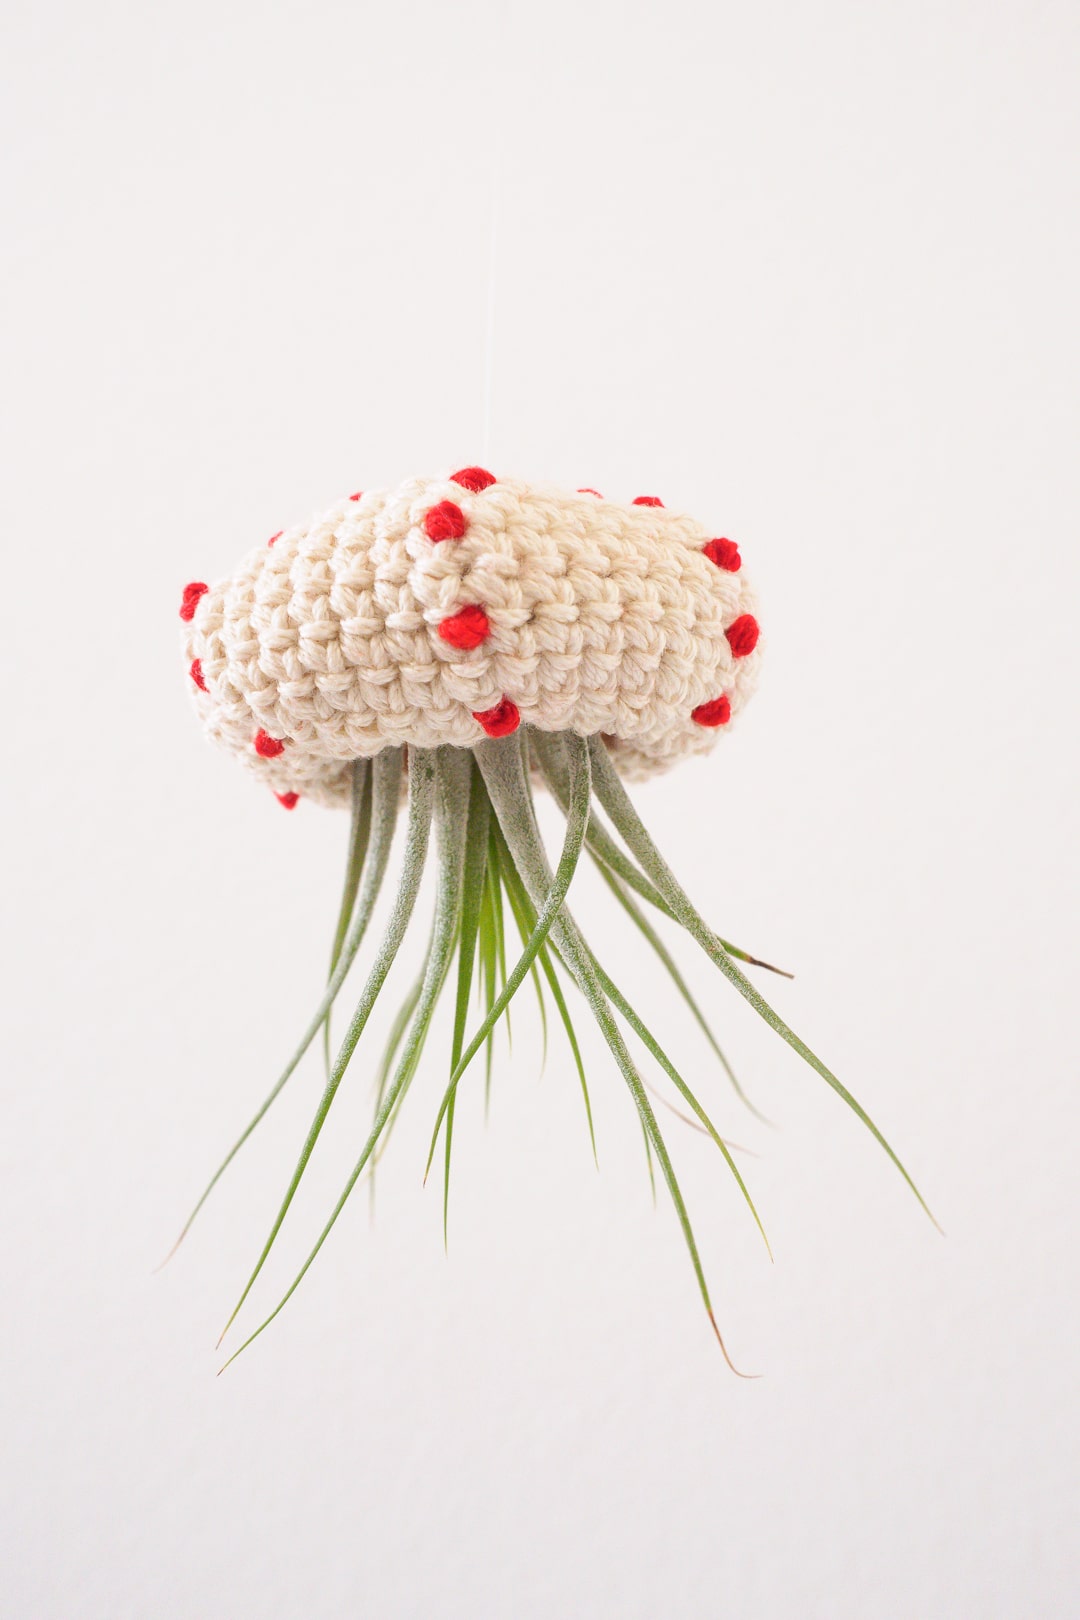 Crochet Air Plant Jellyfish Tutorial